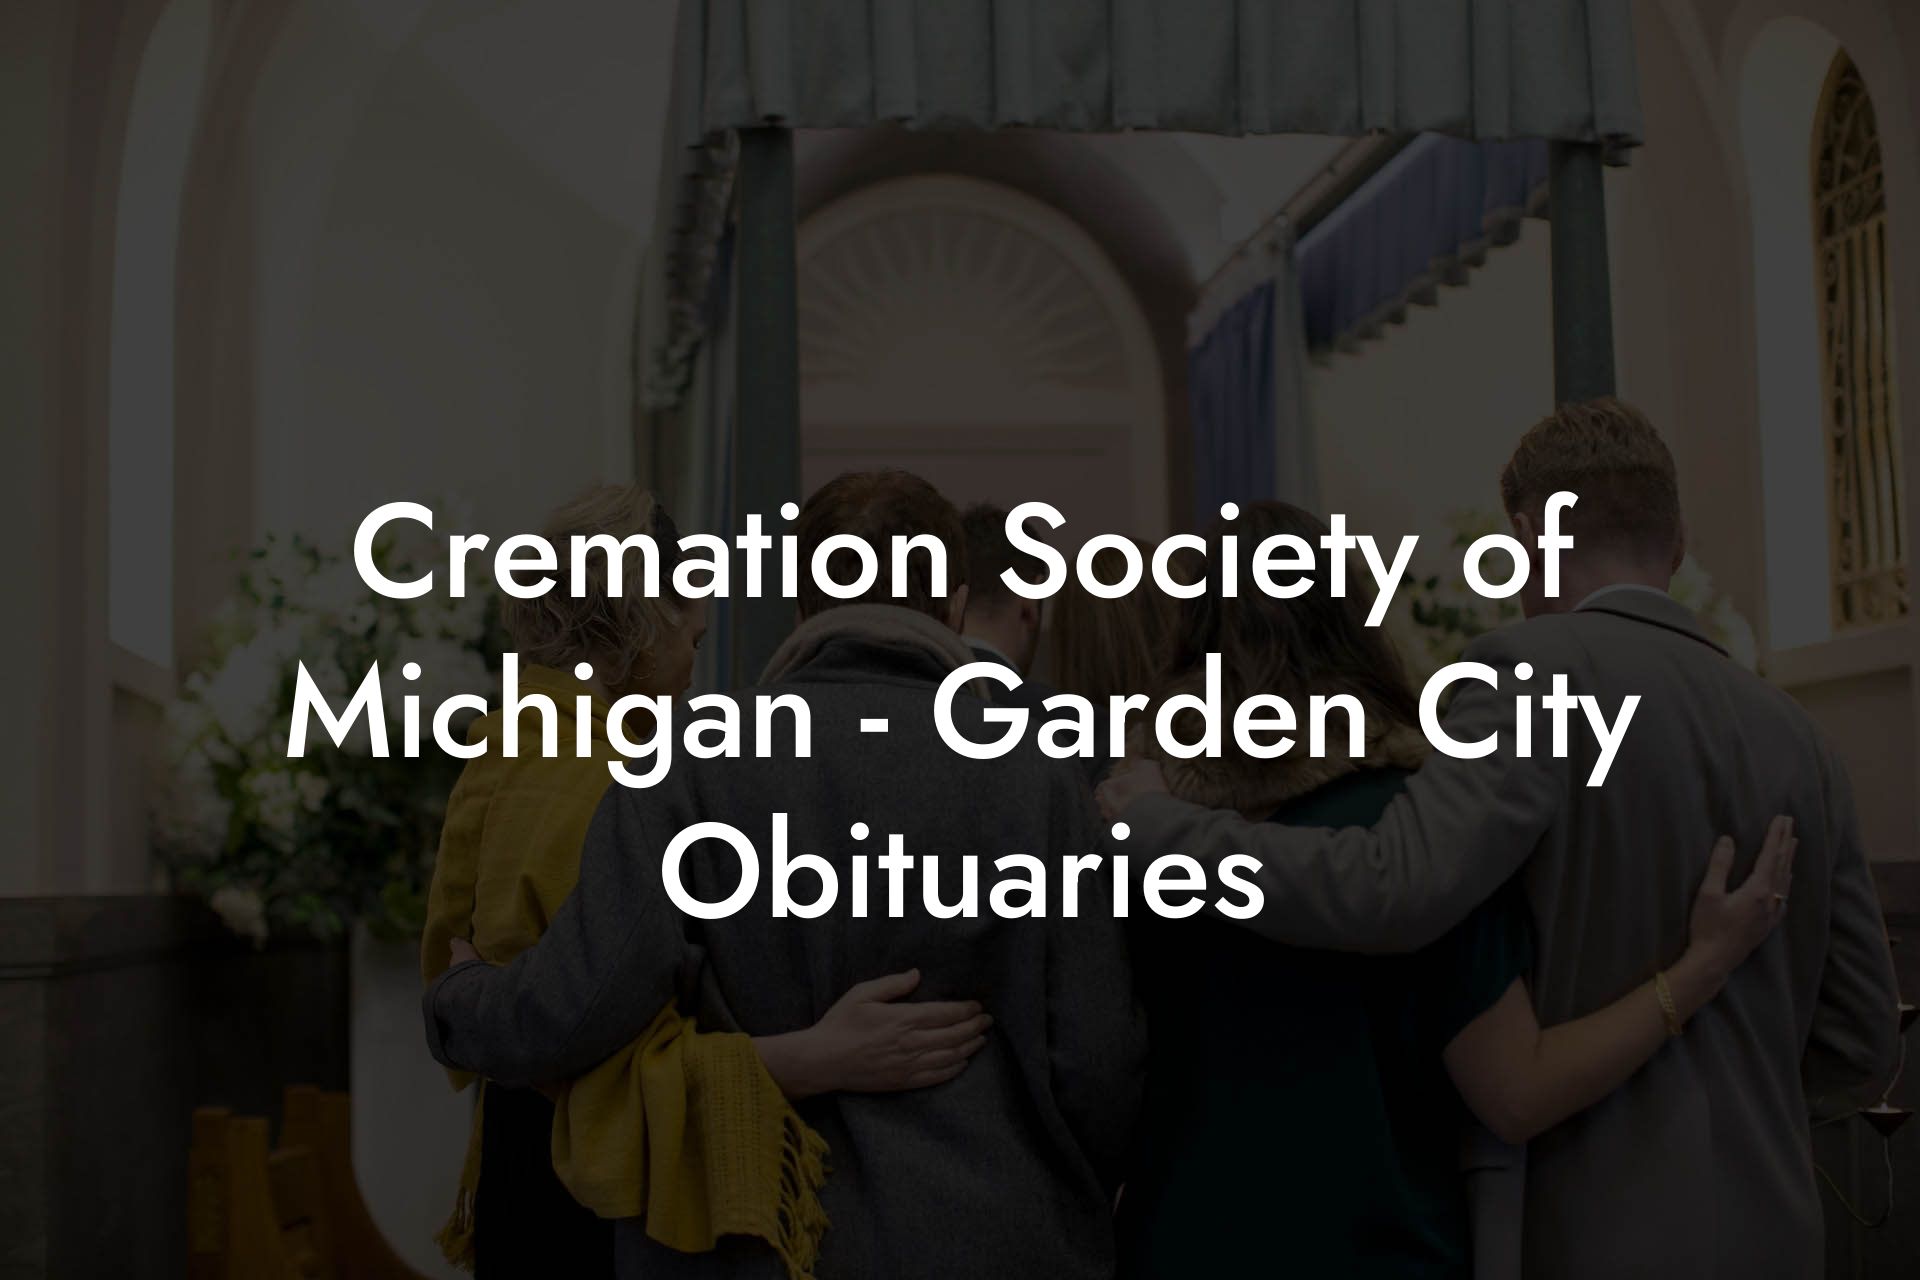 Cremation Society of Michigan - Garden City Obituaries